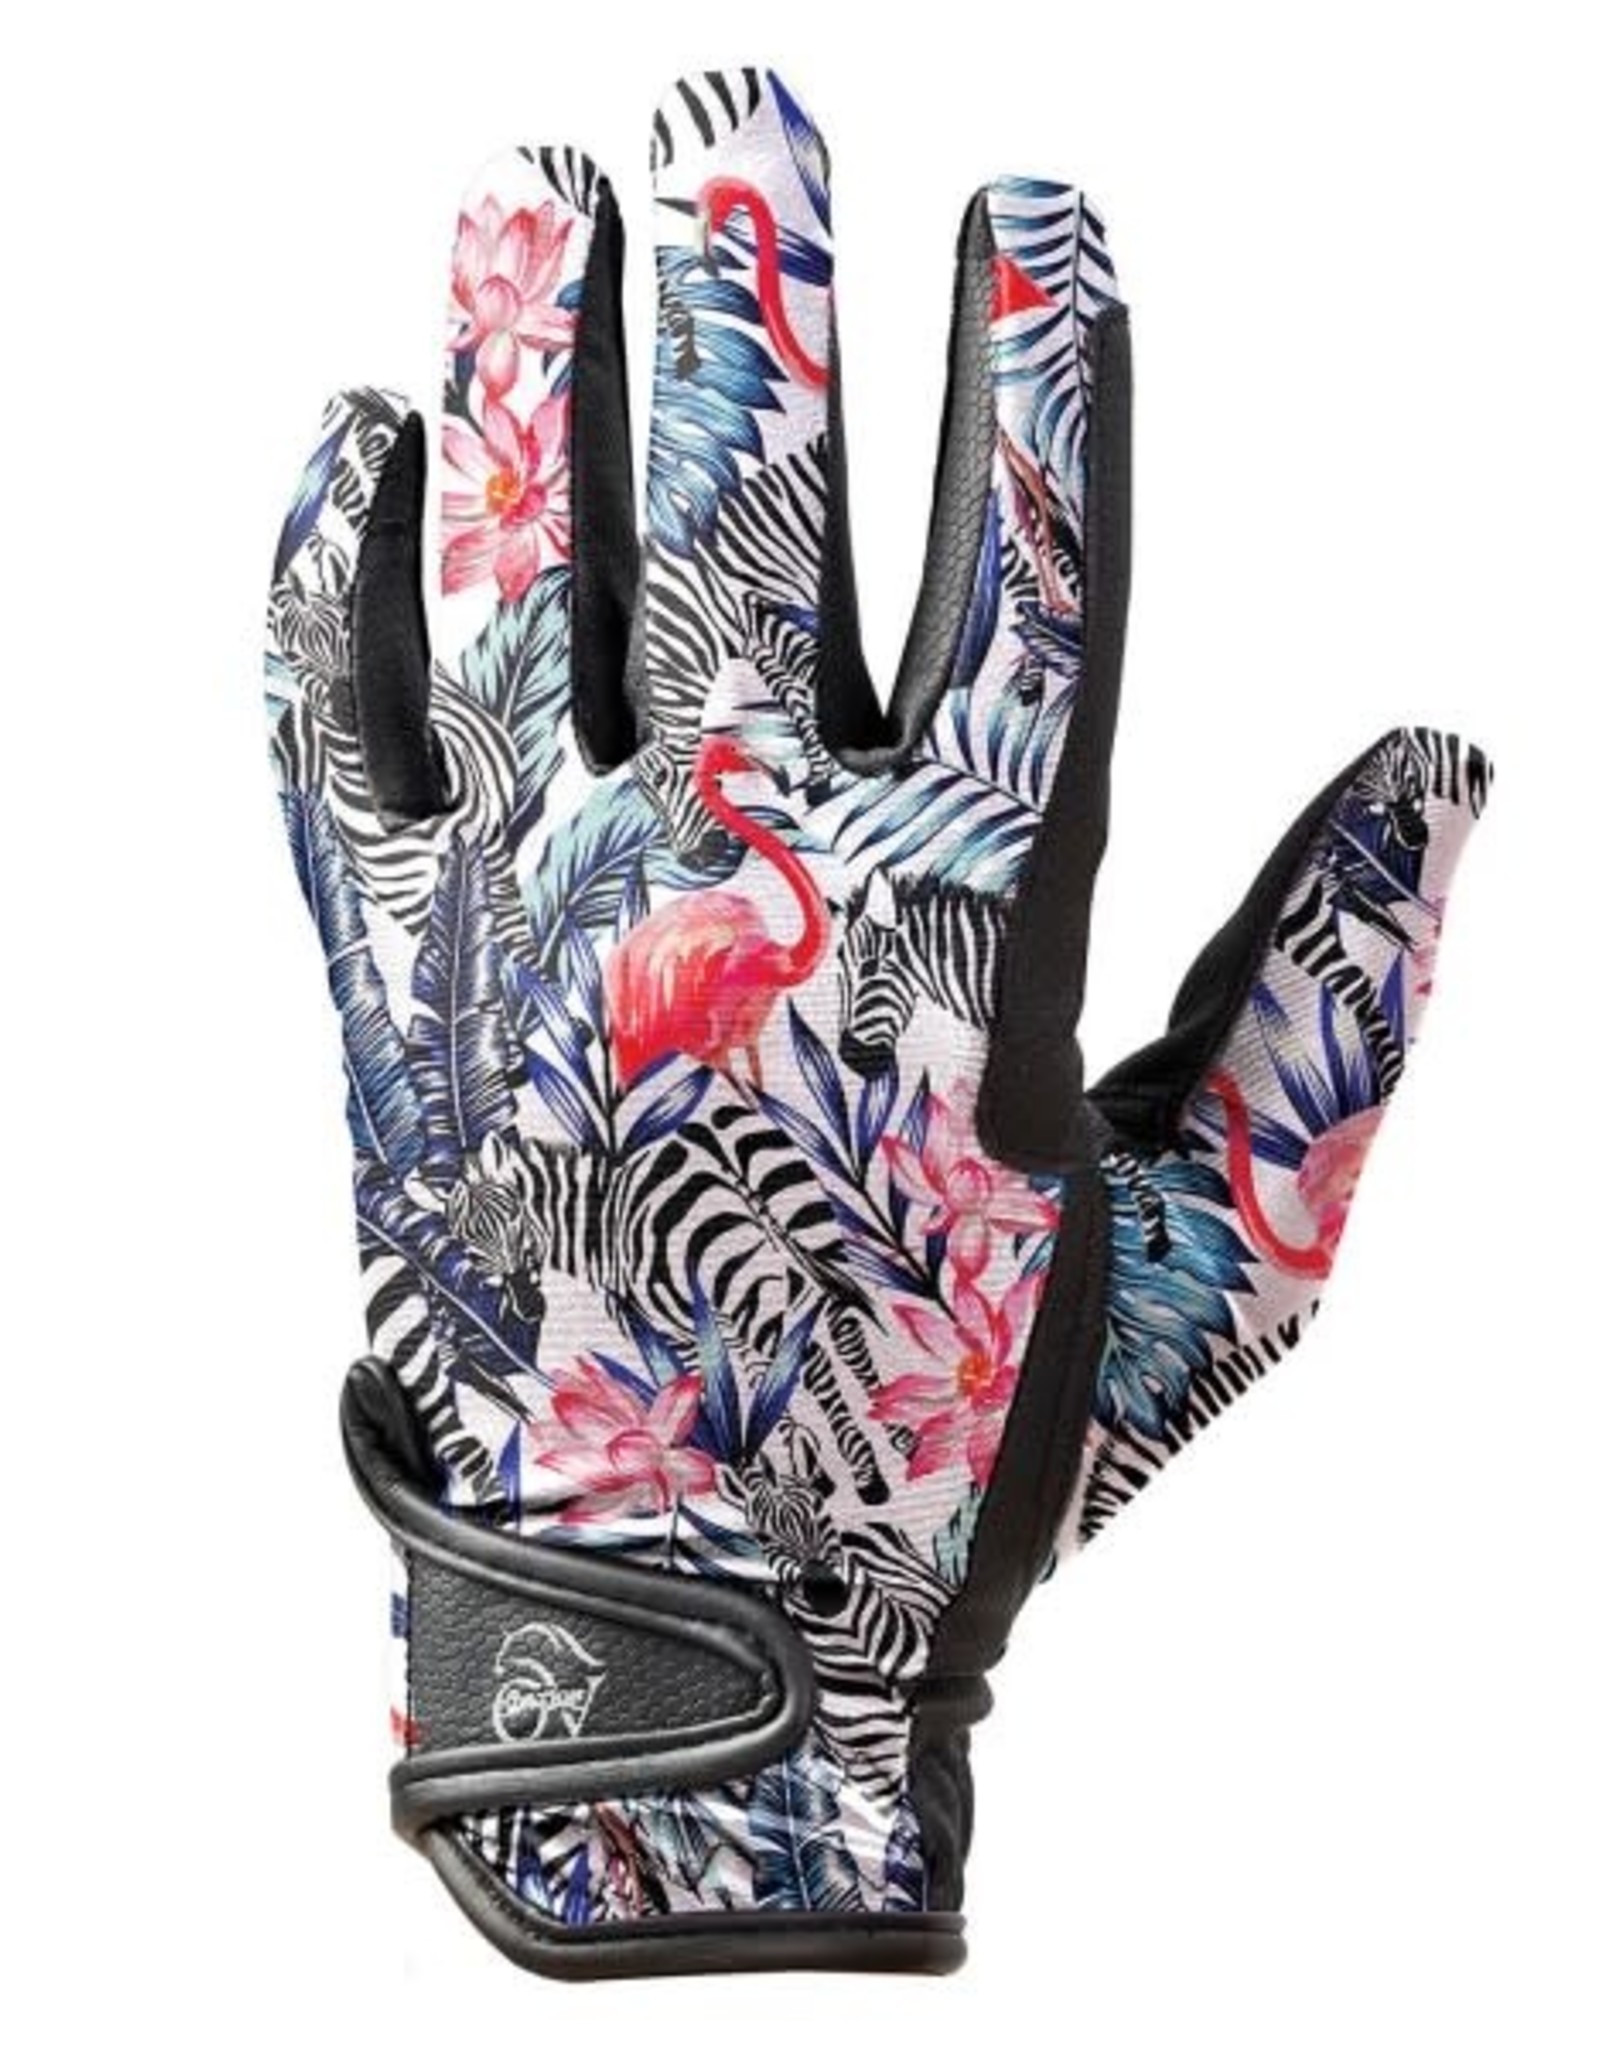 Ovation Cool Rider Gloves Ovation